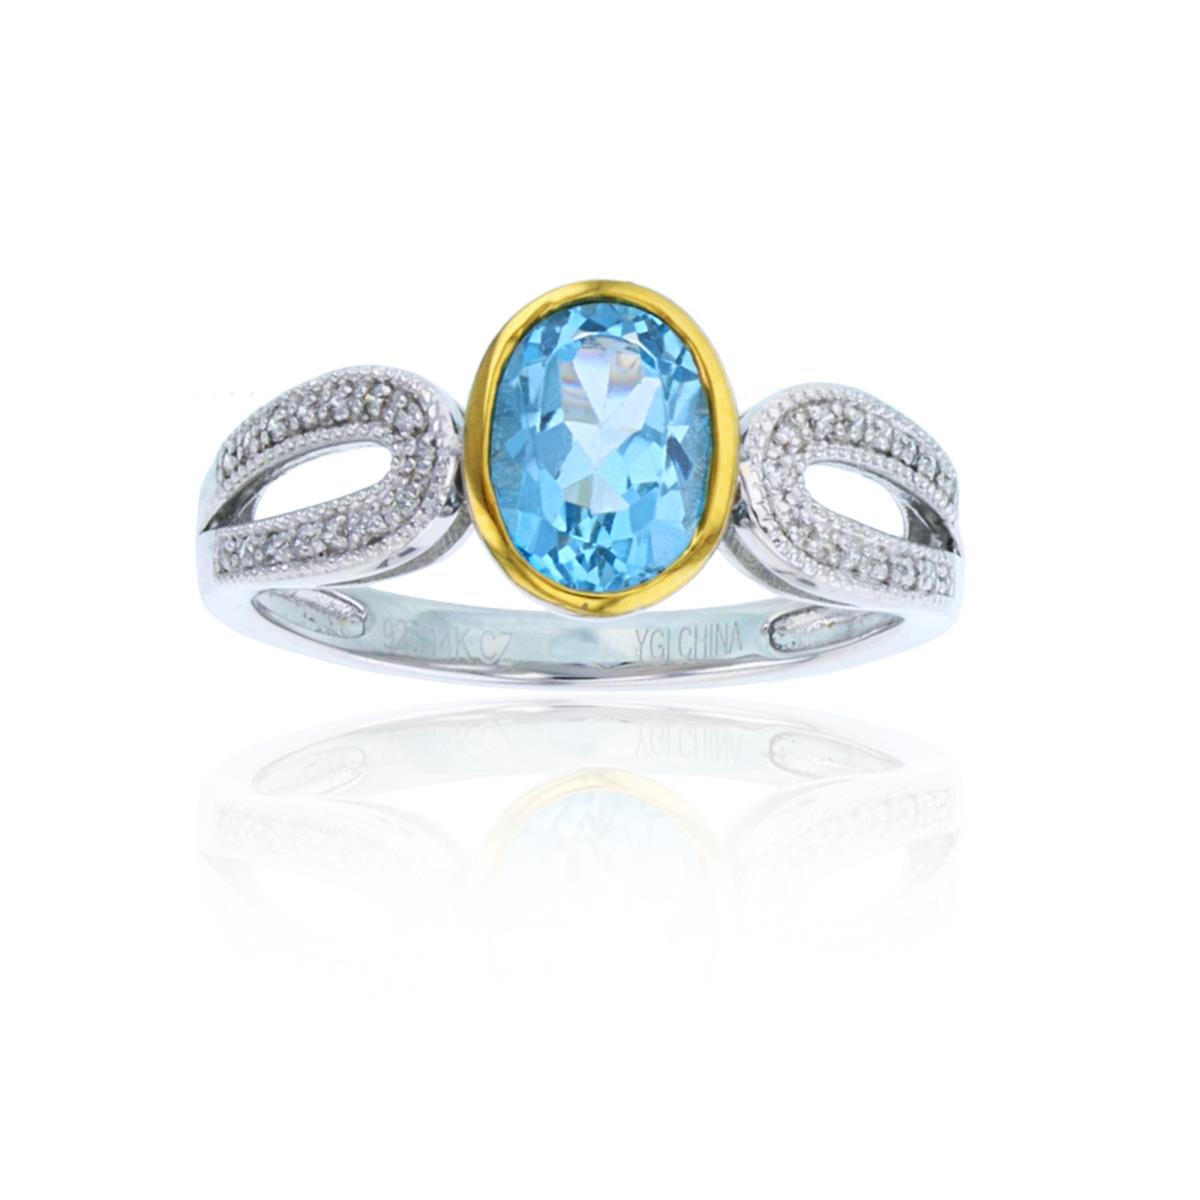  Sterling Silver Yellow & White 0.10cttw Rnd Diamonds & 8x6mm Oval Bezel Swiss Blue Topaz Ring